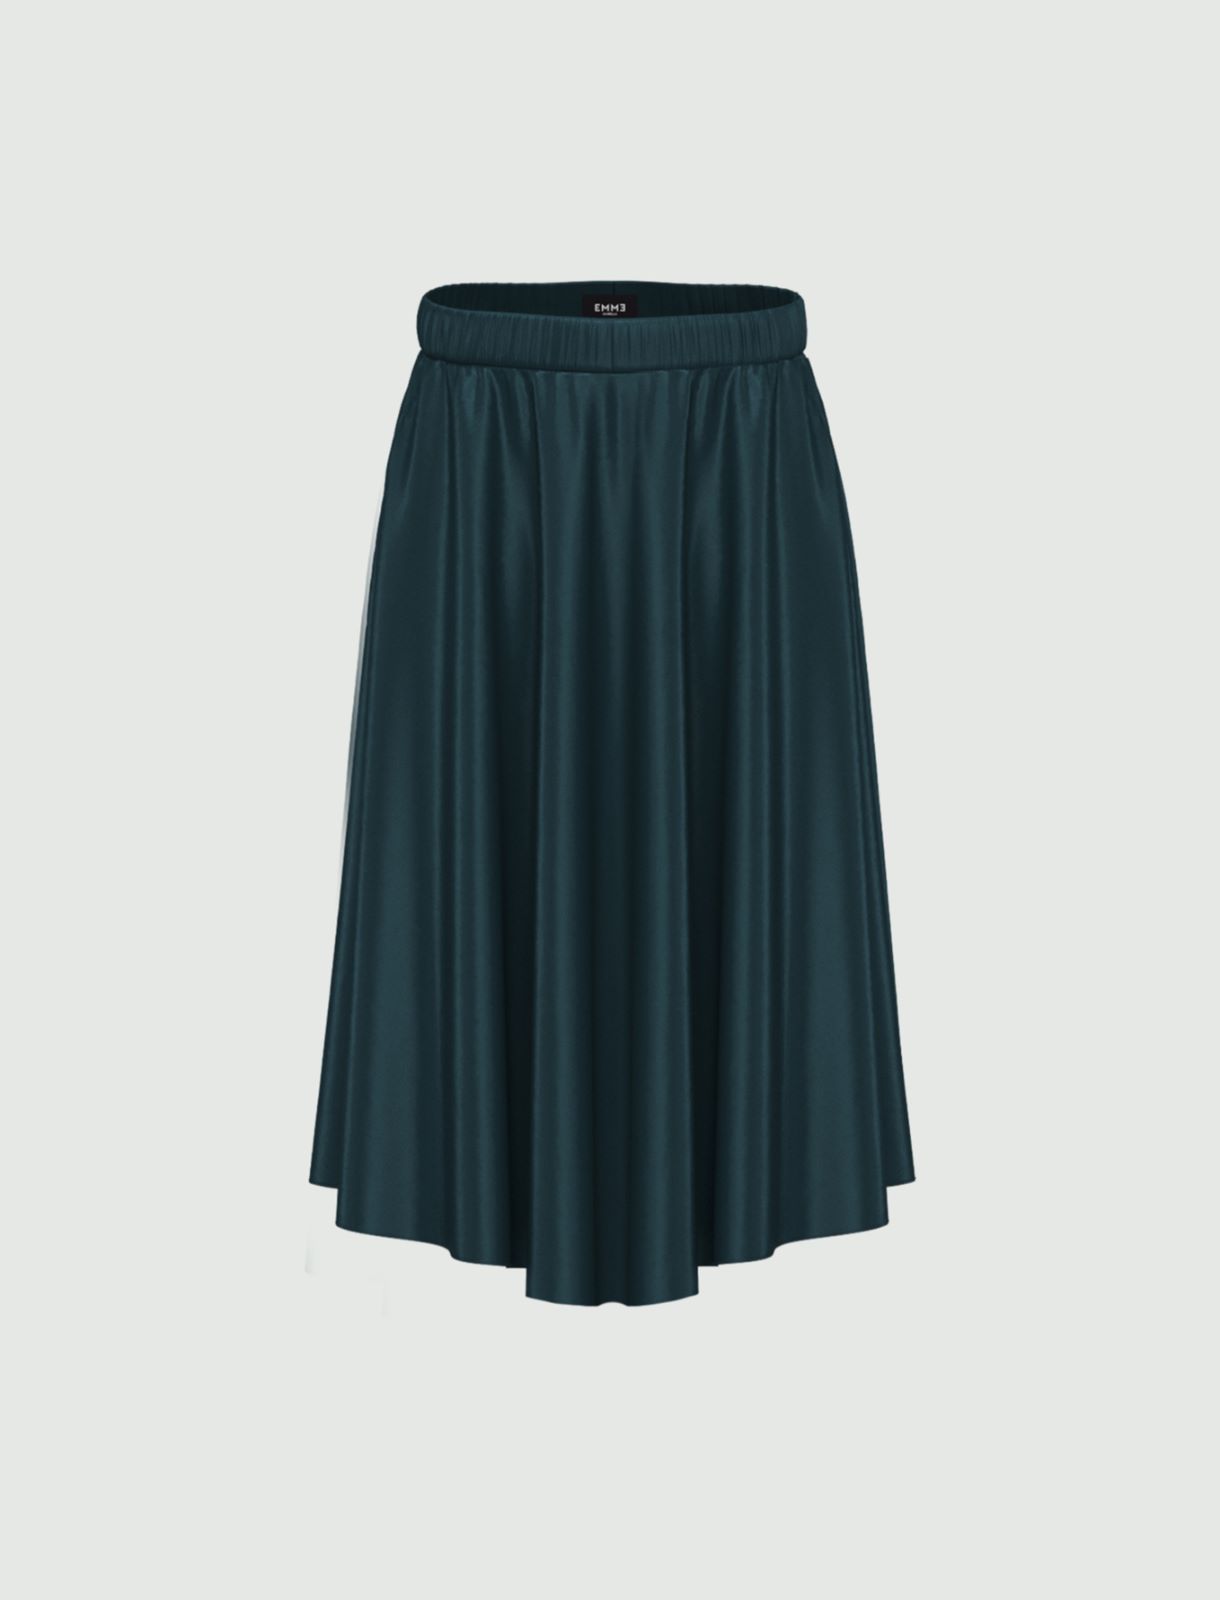 Satin skirt - Dark green - Marella - 4